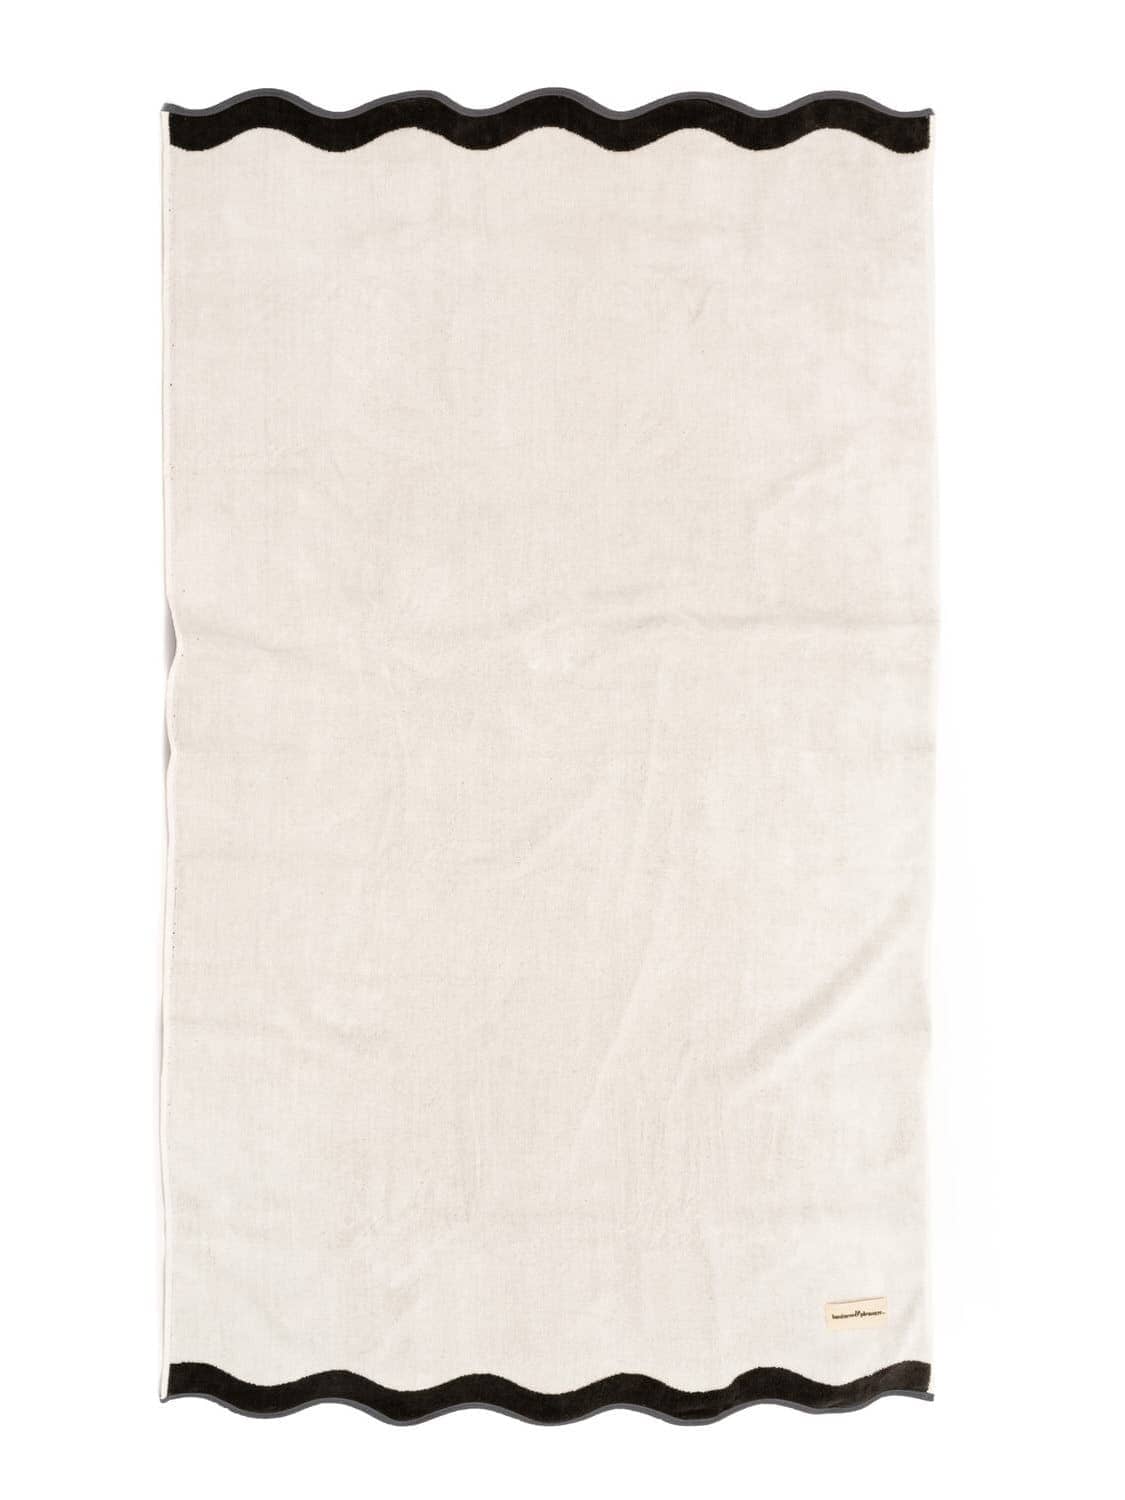 studio image of white riviera beach towel